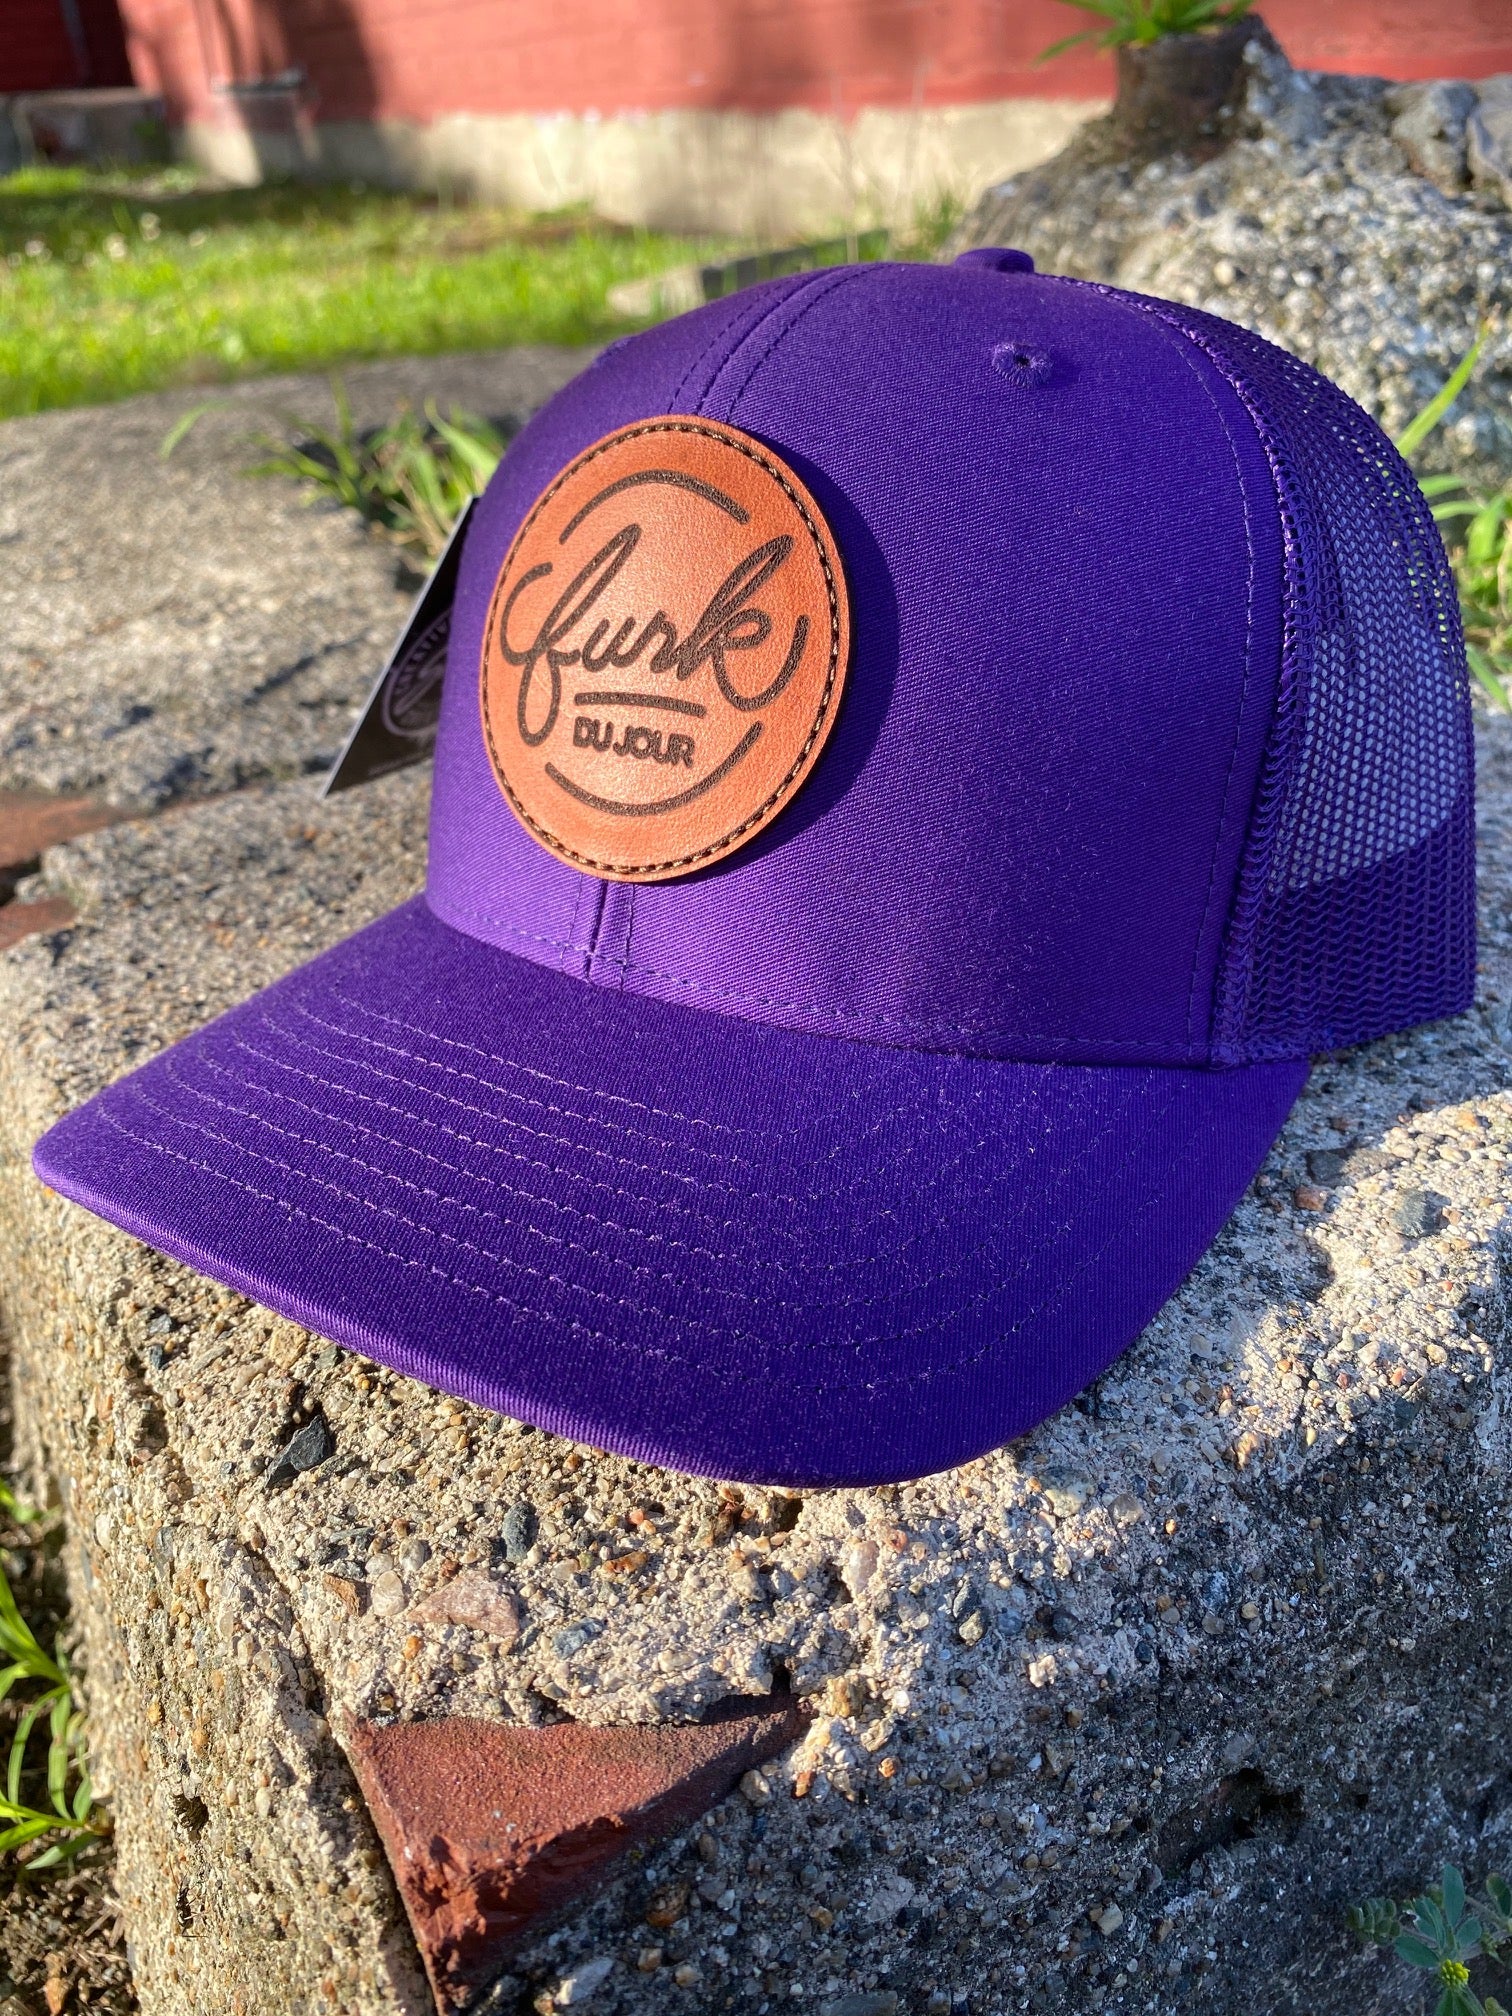 Funk du Jour Prince purple with leather patch trucker cap